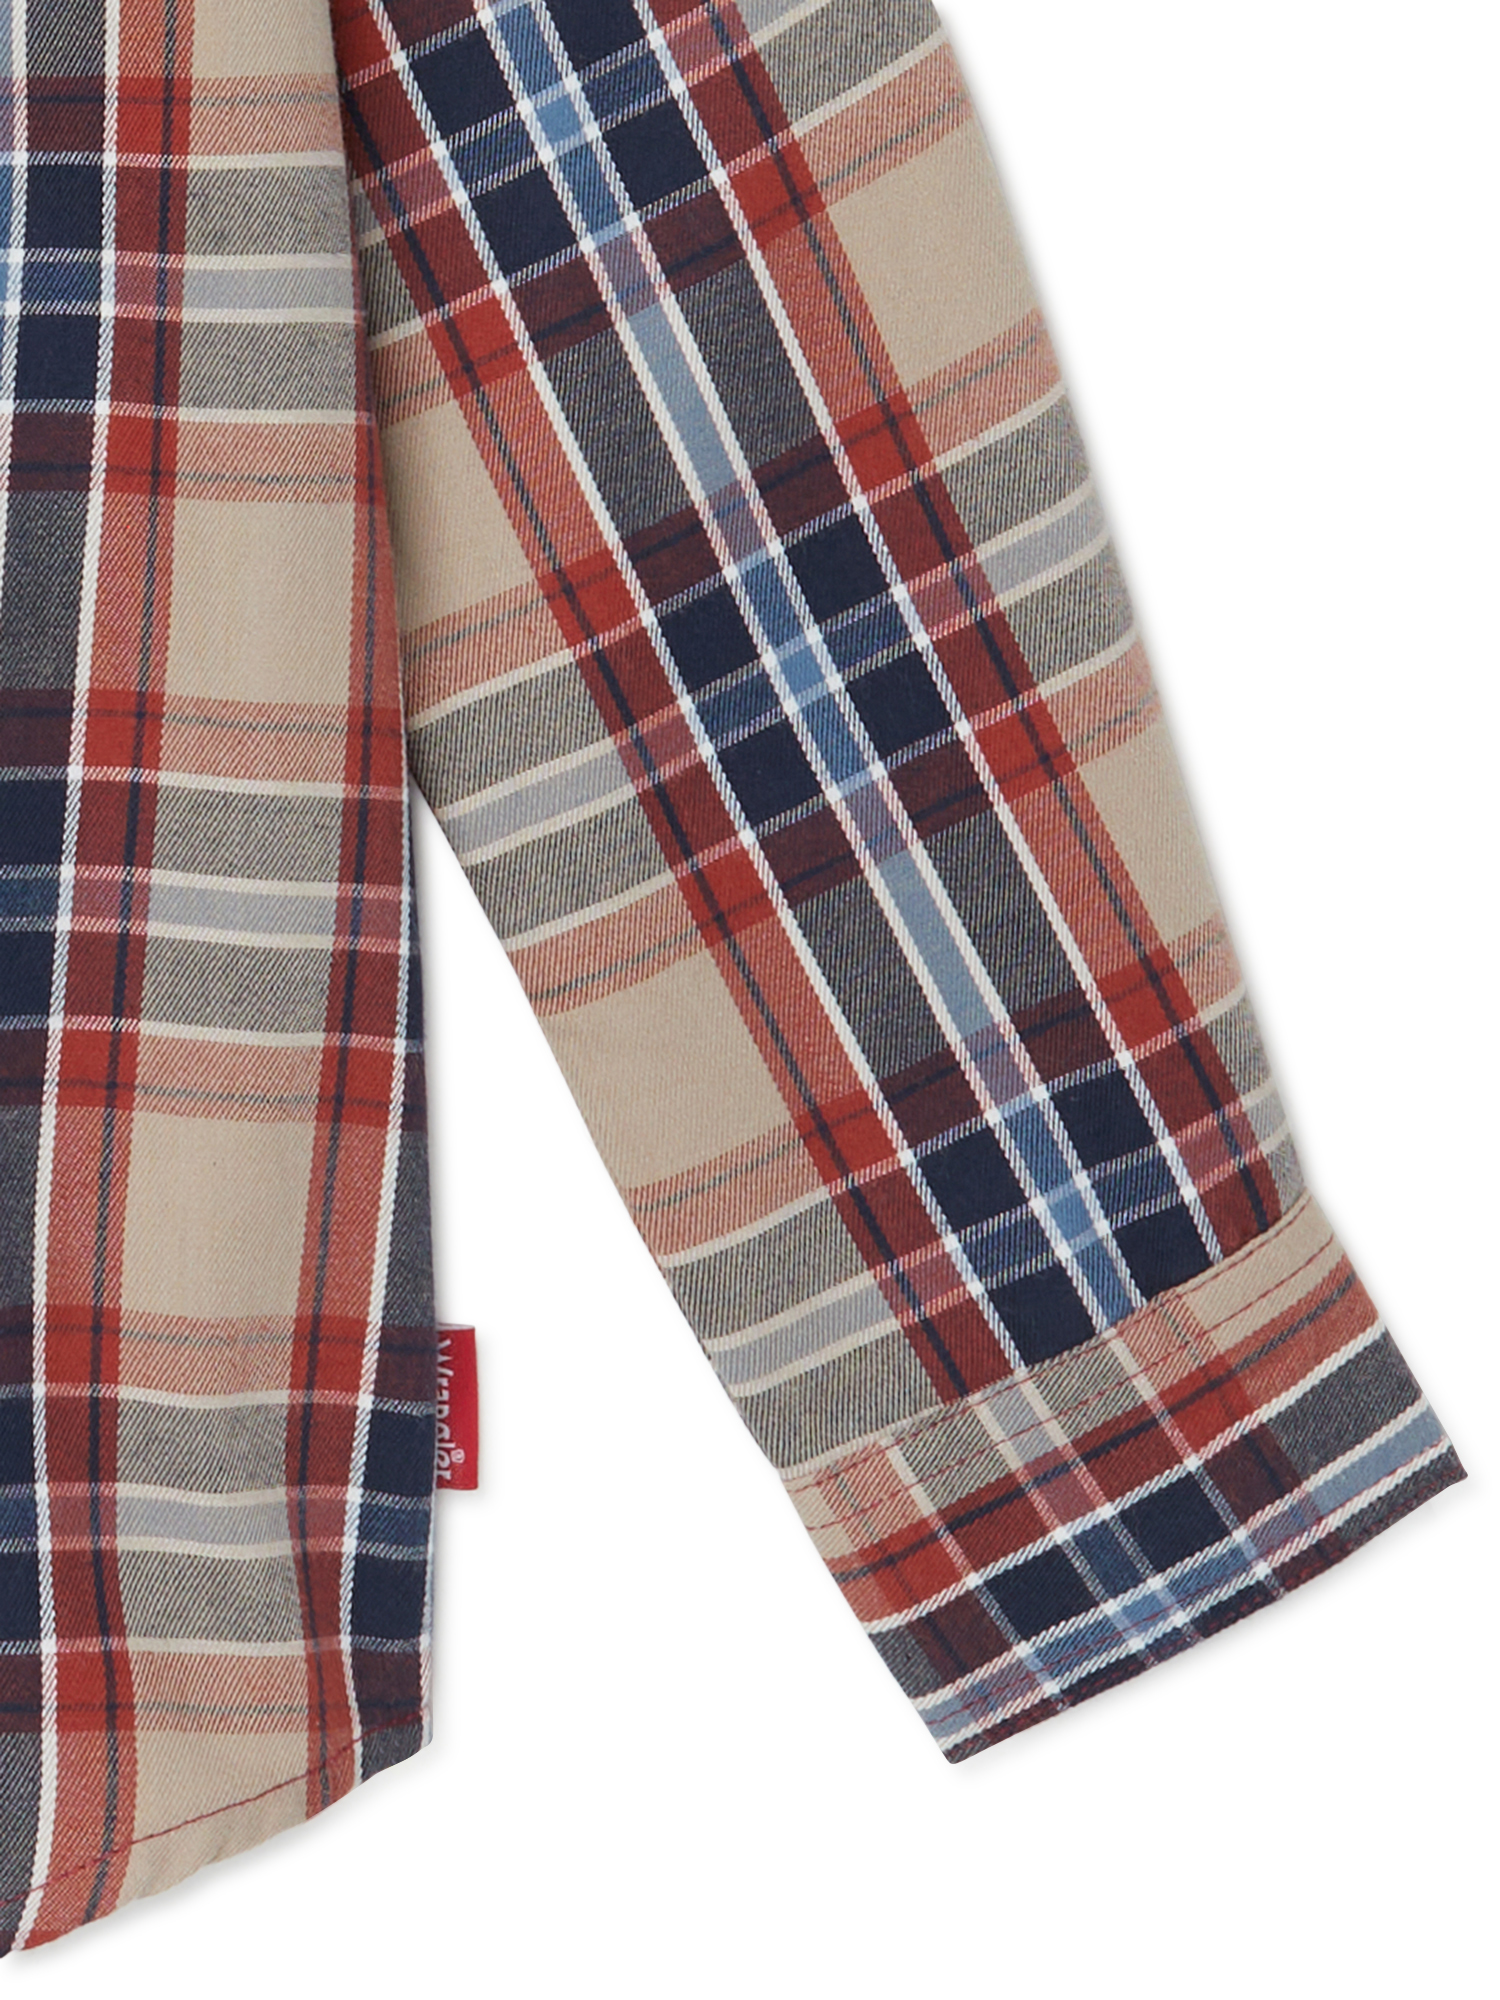 Wrangler Boys Long Sleeve Button-Up Shirt, Sizes 4-18 & Husky - image 3 of 3